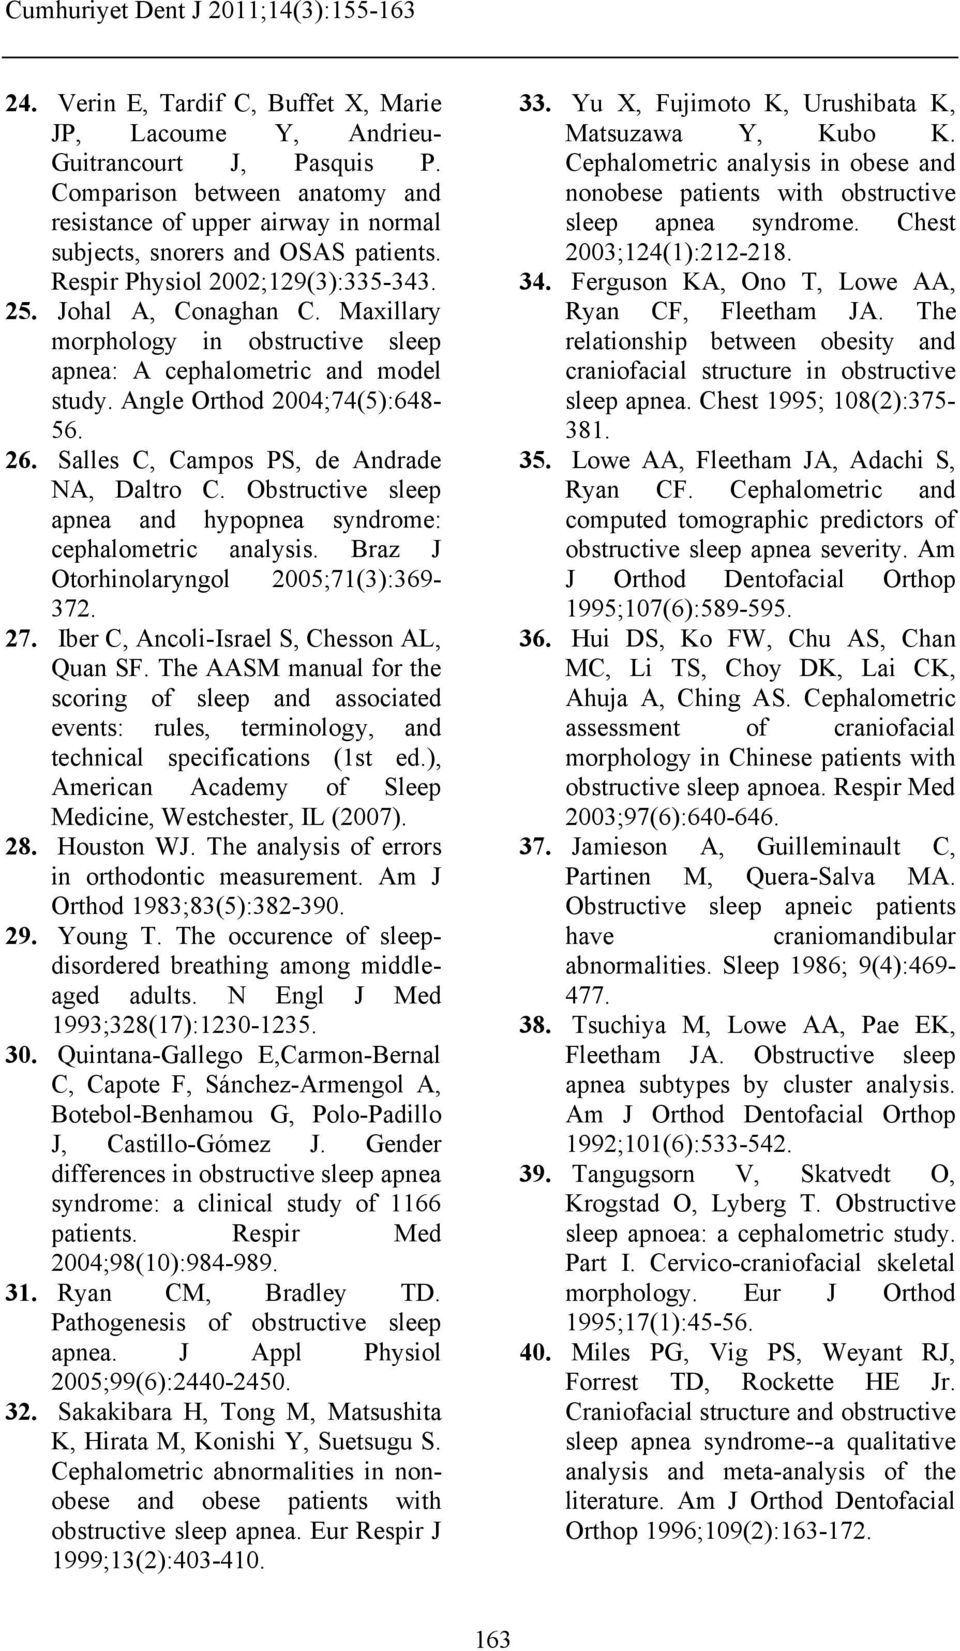 Salles C, Campos PS, de Andrade NA, Daltro C. Obstructive sleep apnea and hypopnea syndrome: cephalometric analysis. Braz J Otorhinolaryngol 2005;71(3):369-372. 27.